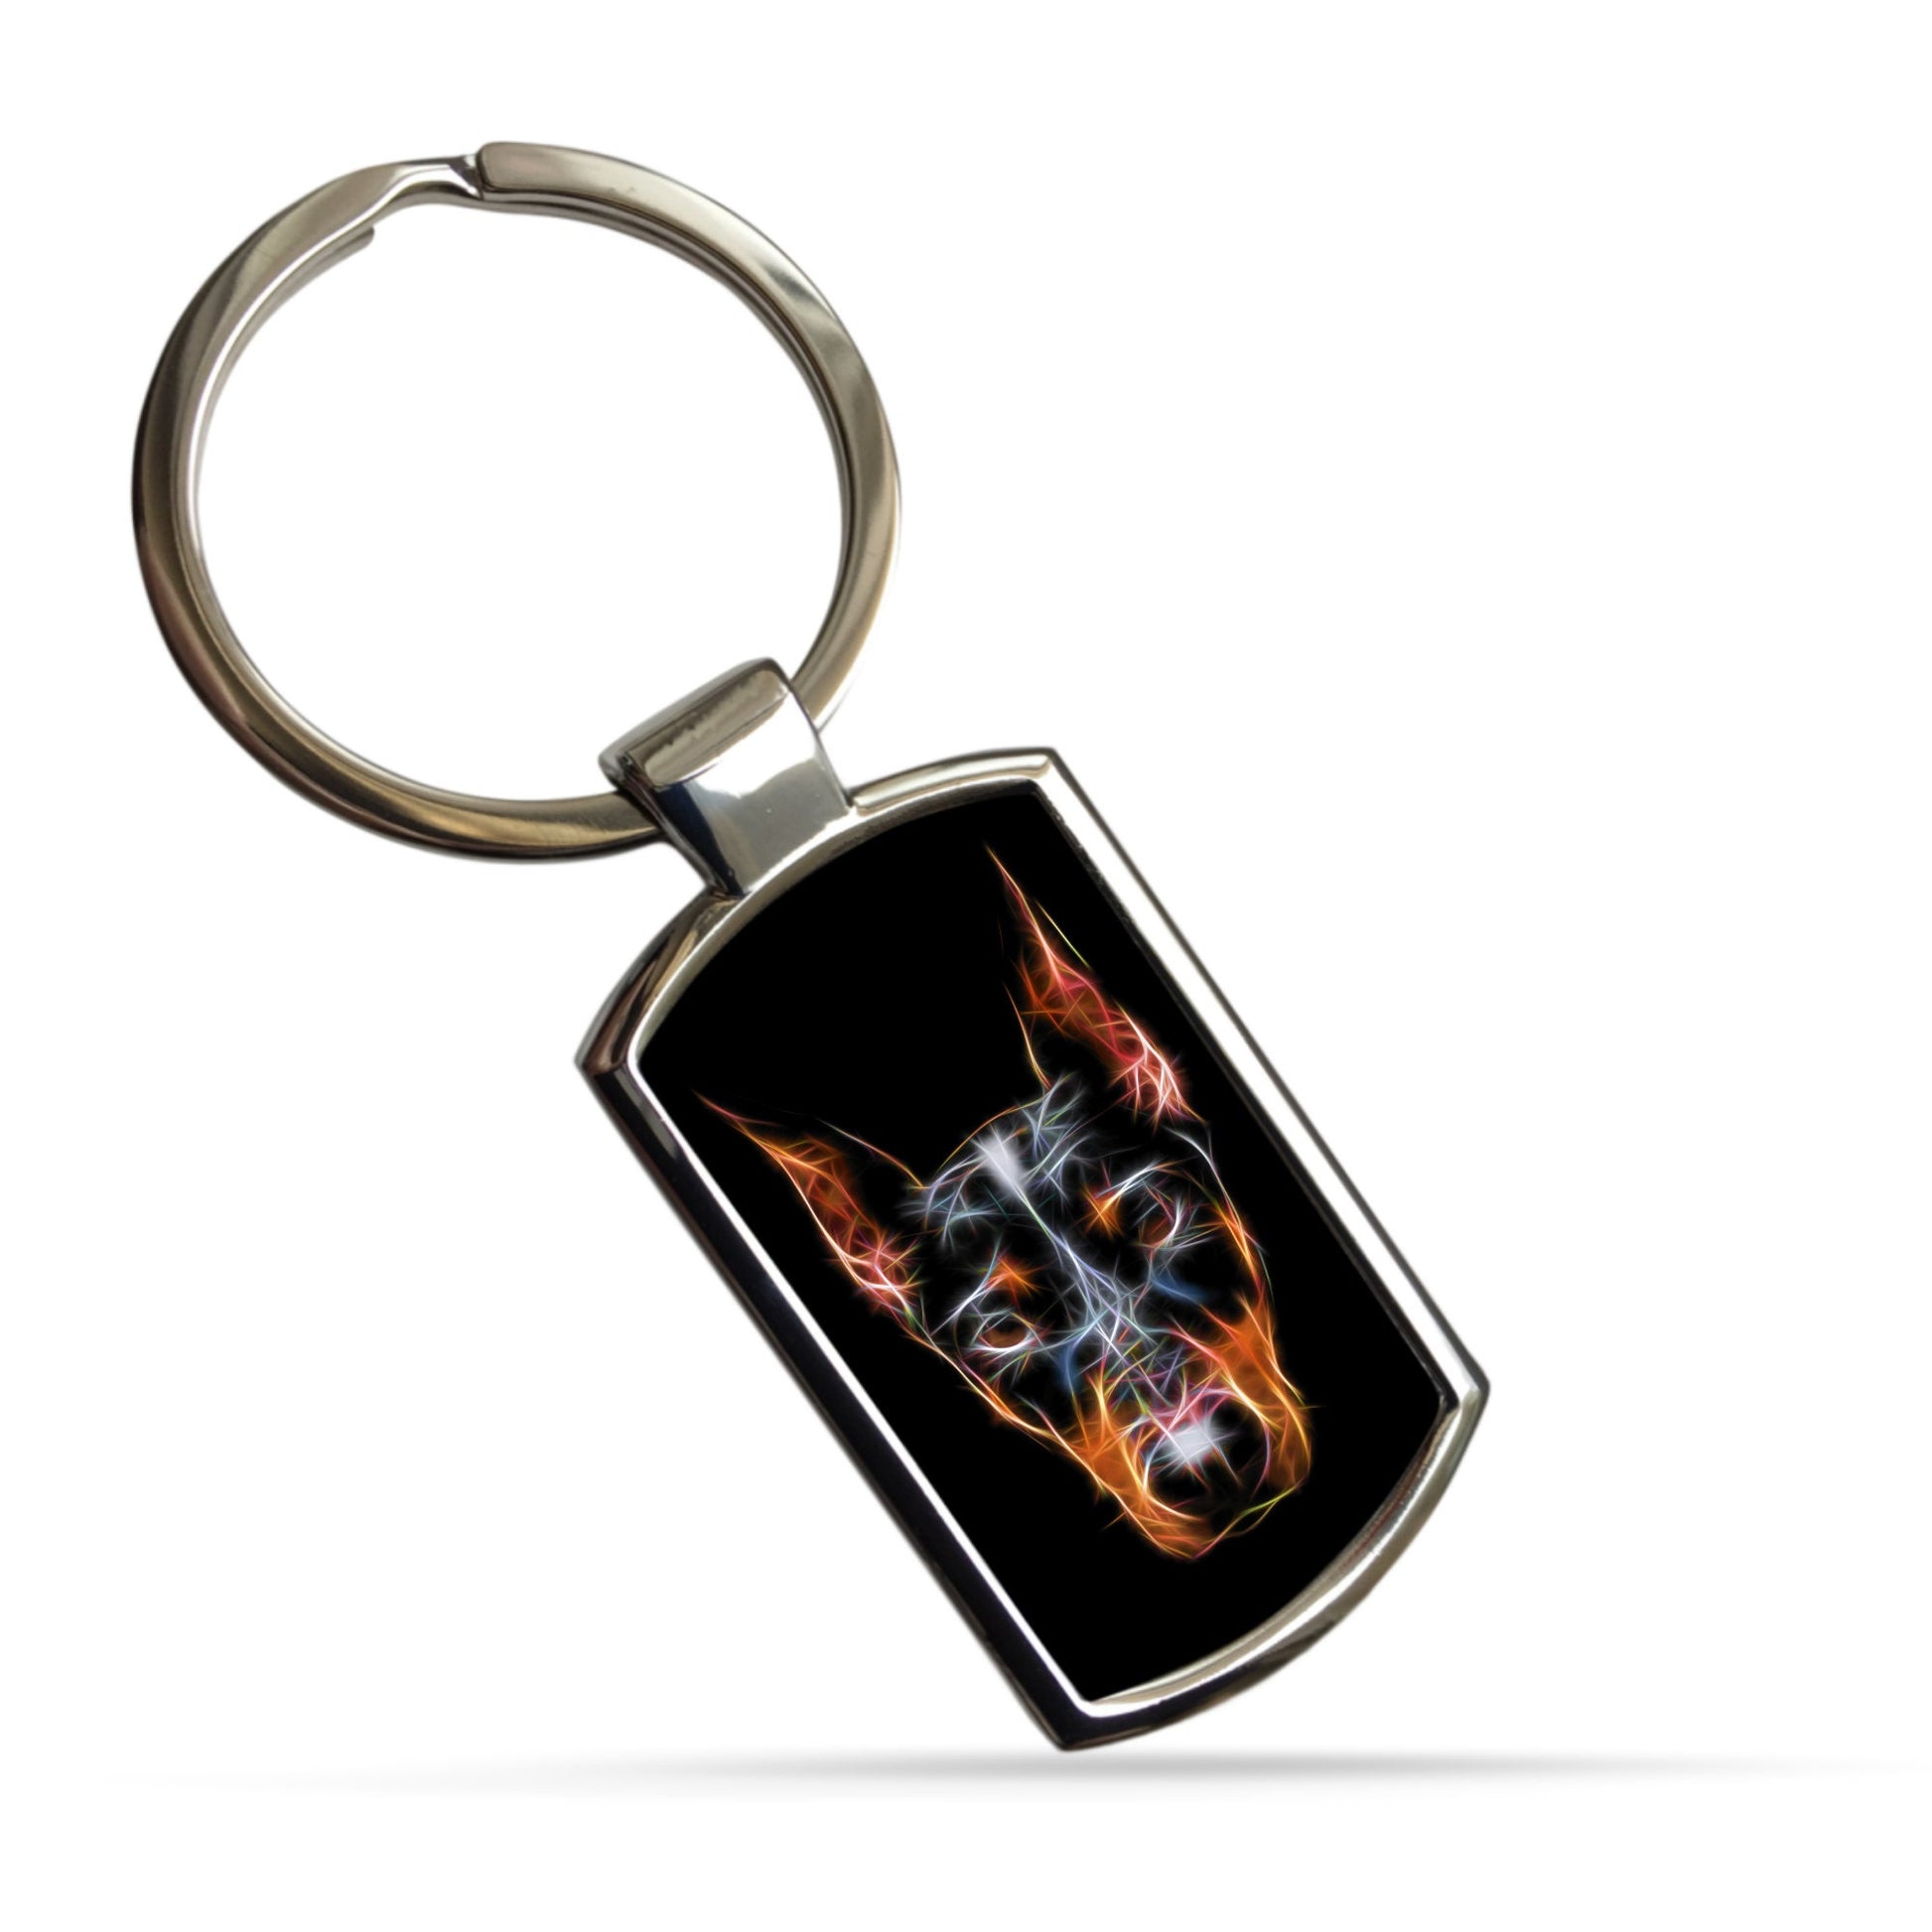 Doberman Dog Keychain with Fractal Art Design